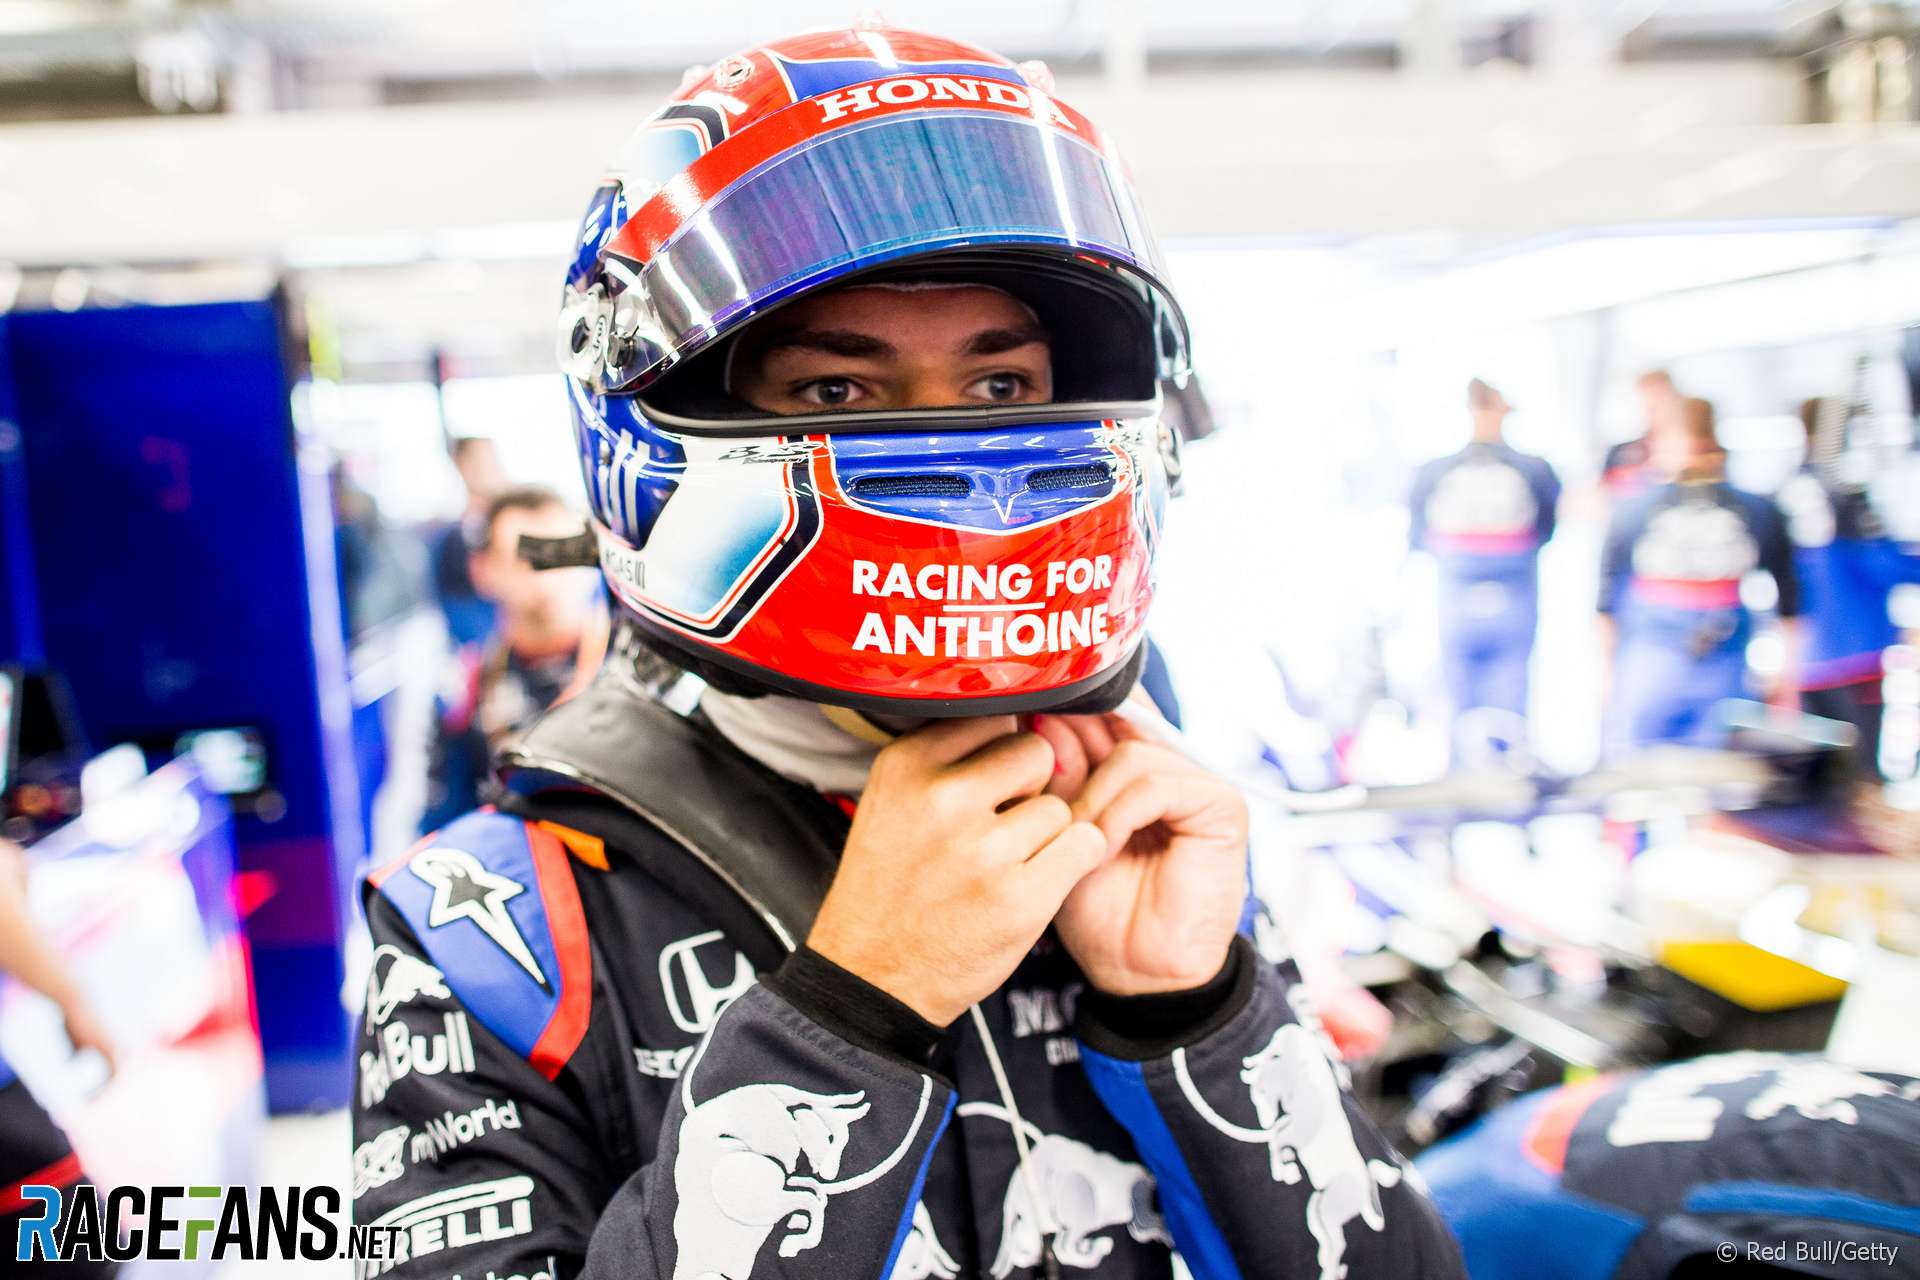 Pierre Gasly, Toro Rosso, Spa-Francorchamps, 2019